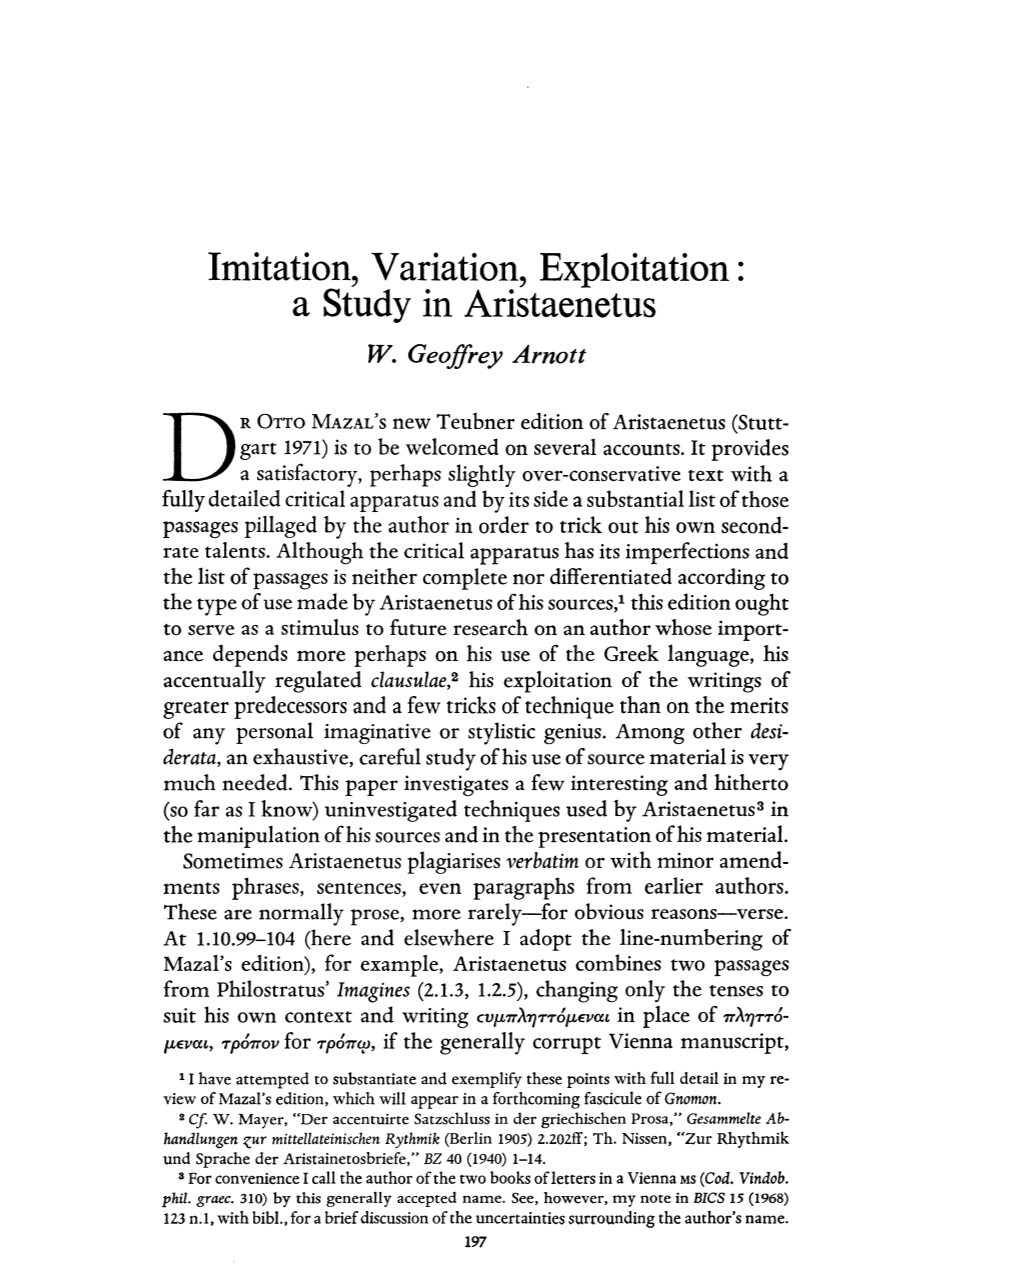 Imitation, Variation, Exploitation: a Study in Aristaenetus Arnott, W Geoffrey Greek, Roman and Byzantine Studies; Summer 1973; 14, 2; Proquest Pg